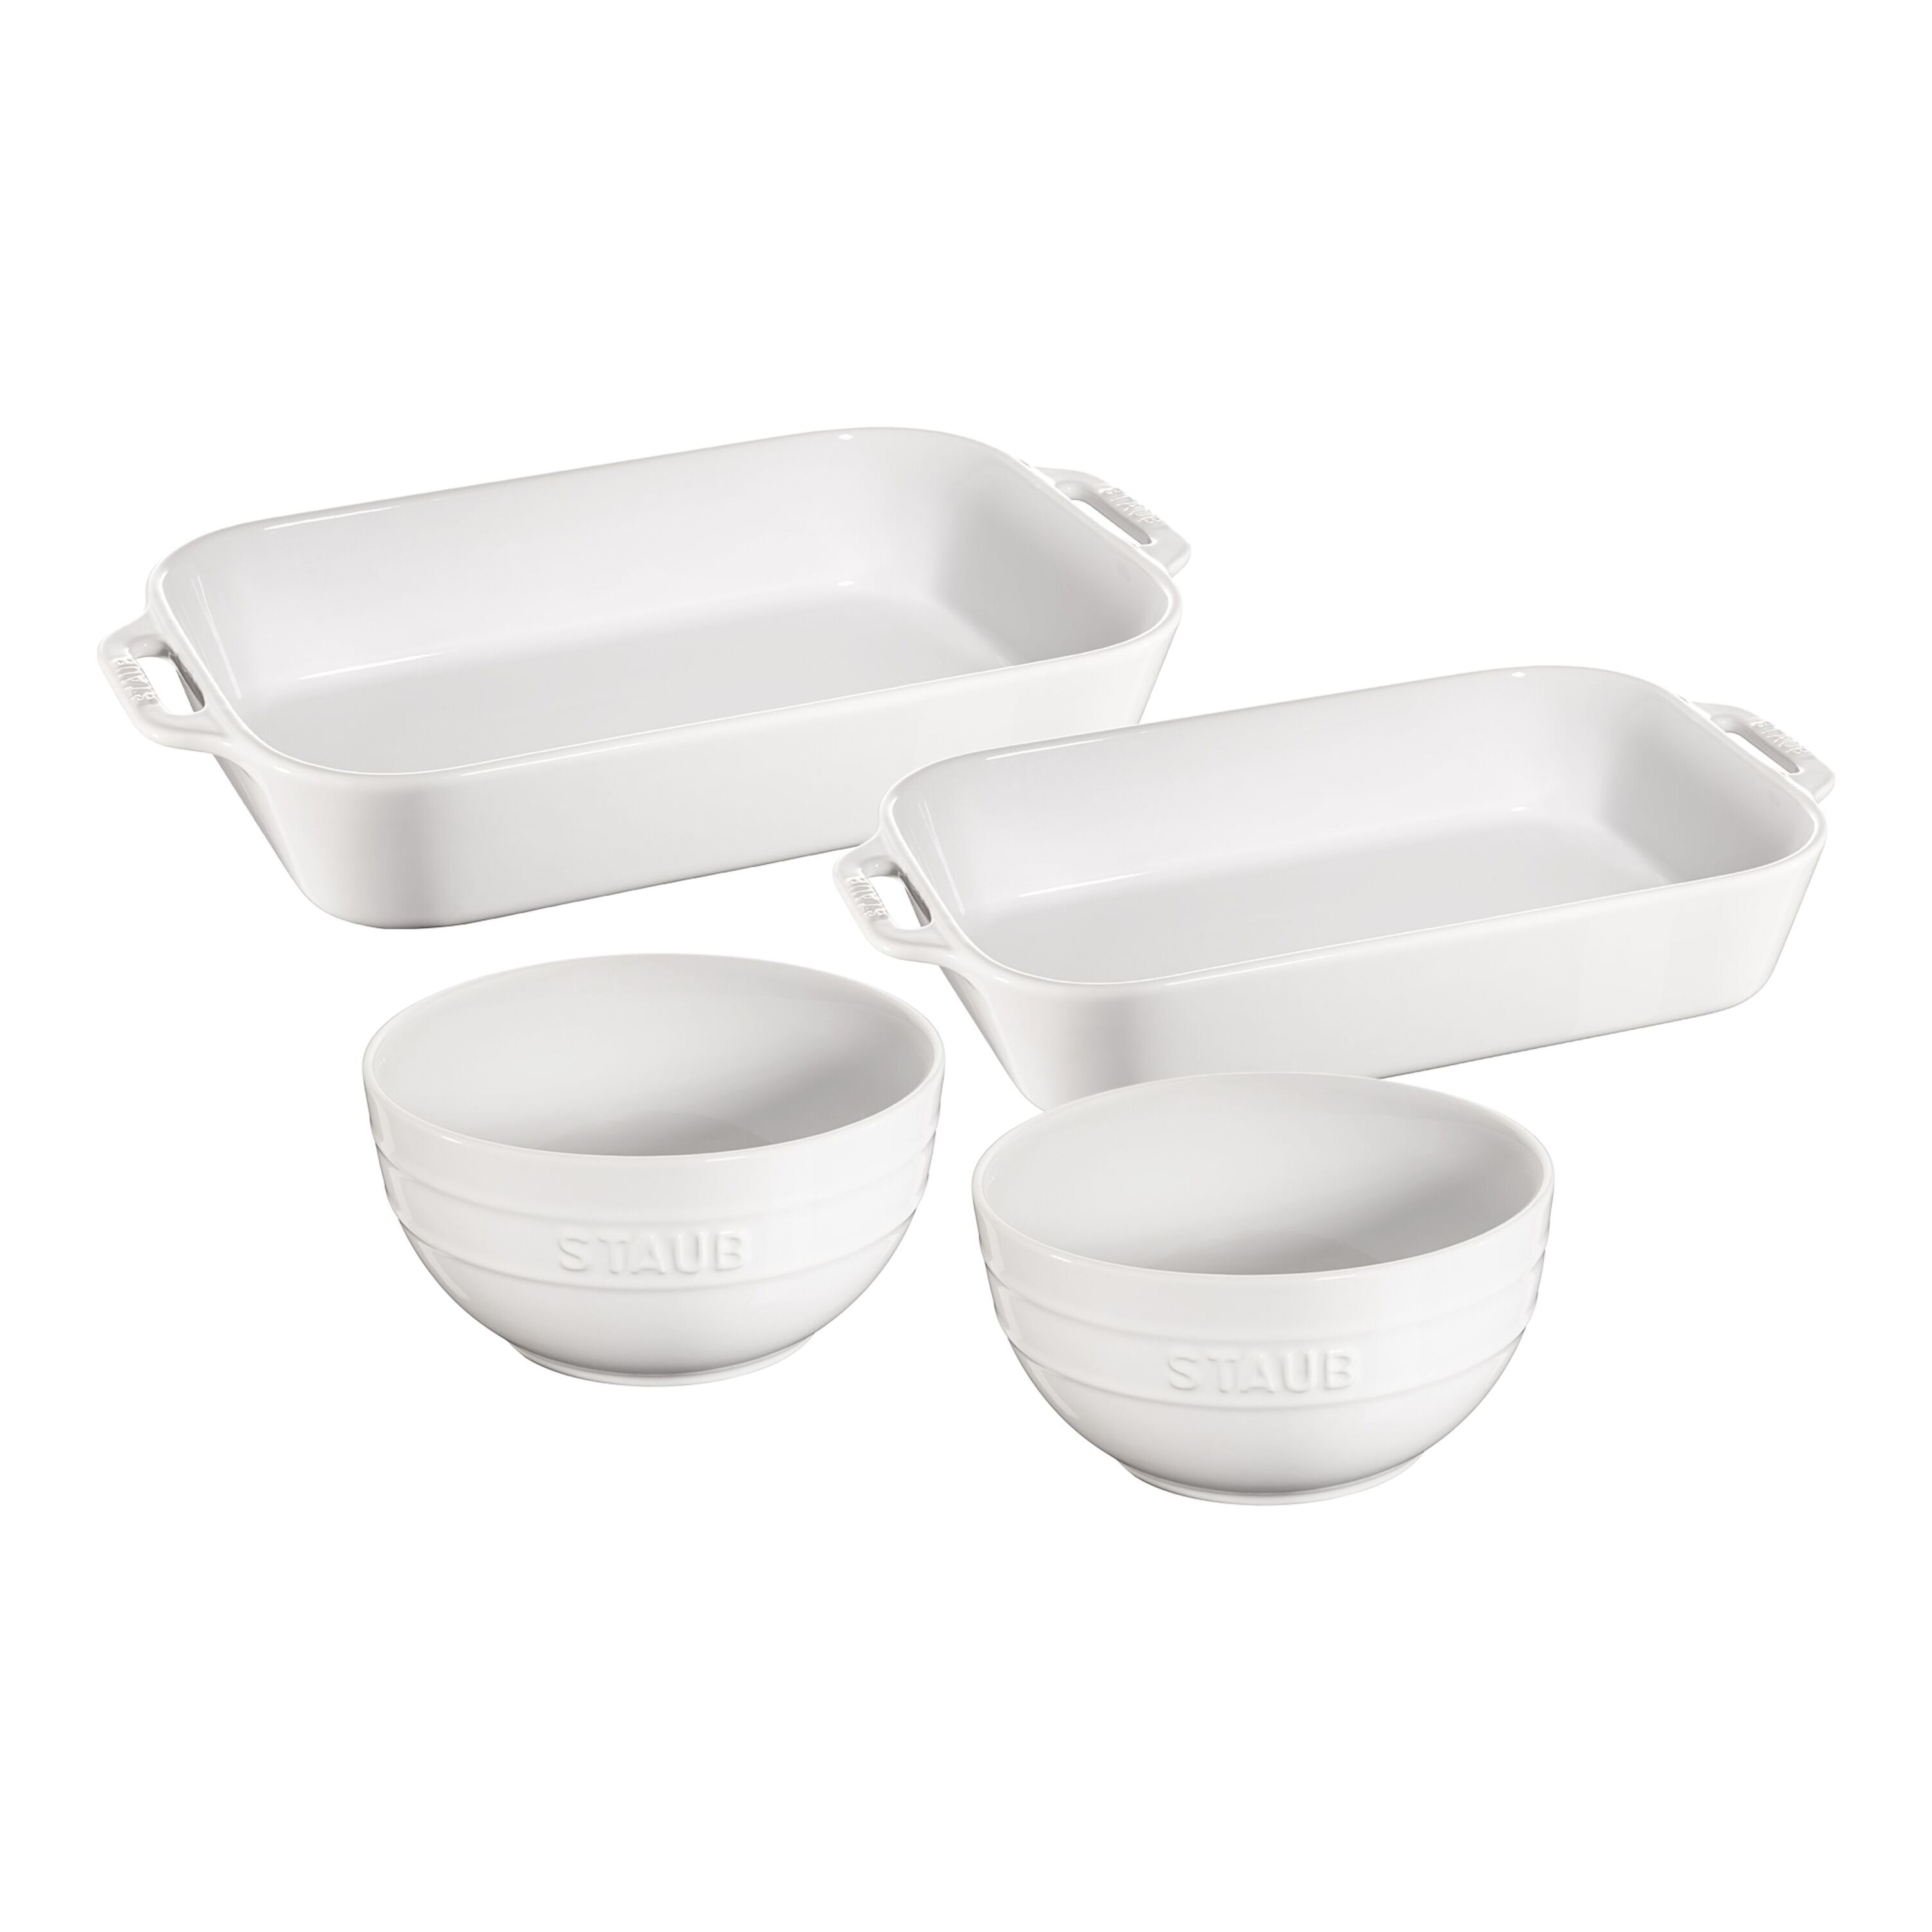 Staub Ceramics 4-pc Baking Pans Set, Casserole Dish with Lid